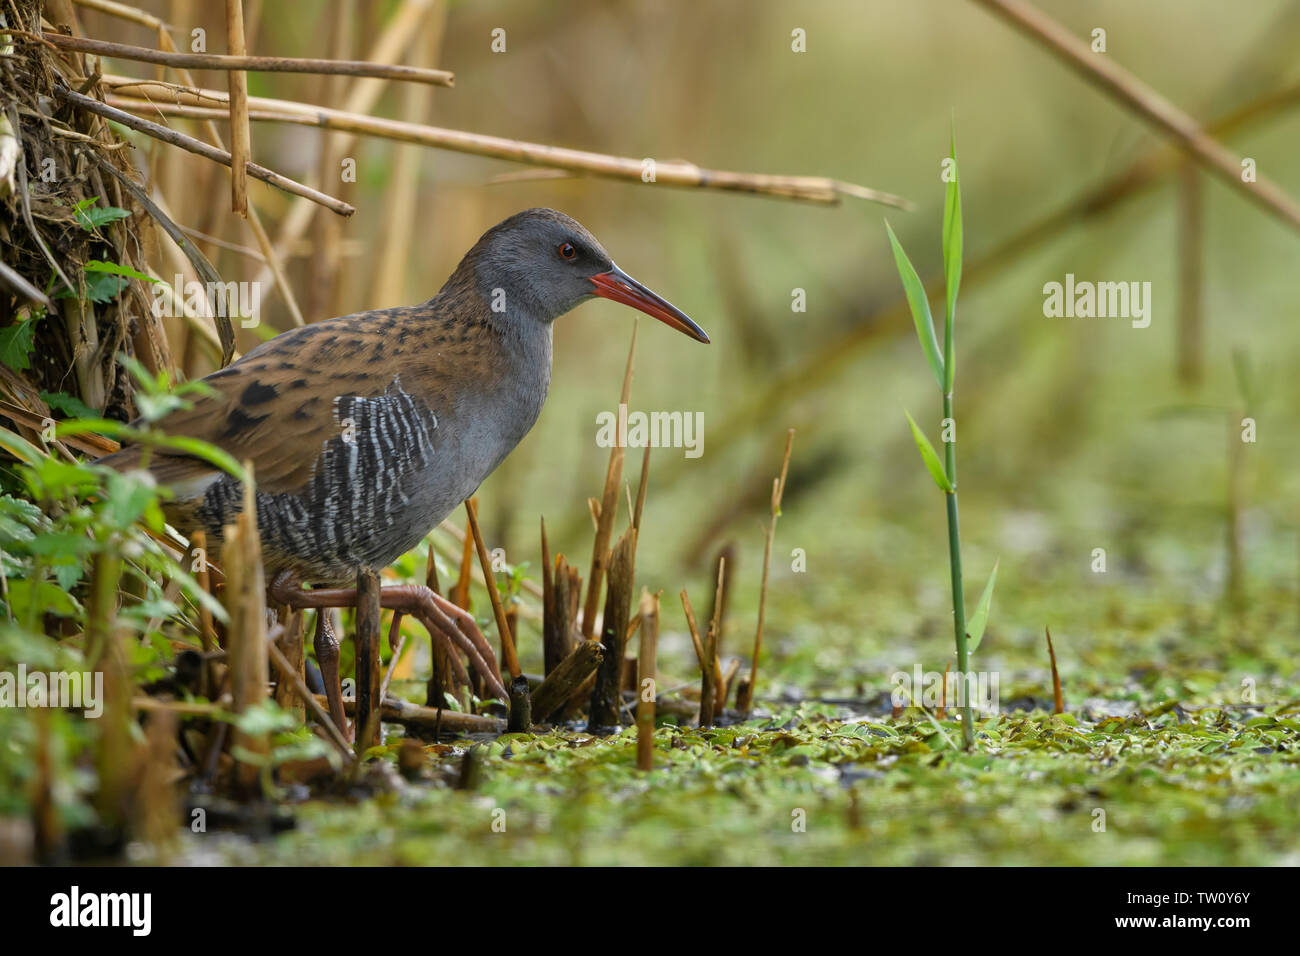 Water Rail - Rallus aquaticus, rare shy bird from European reeds and wetlands, Hortobagy National Park, Hungary. Stock Photo